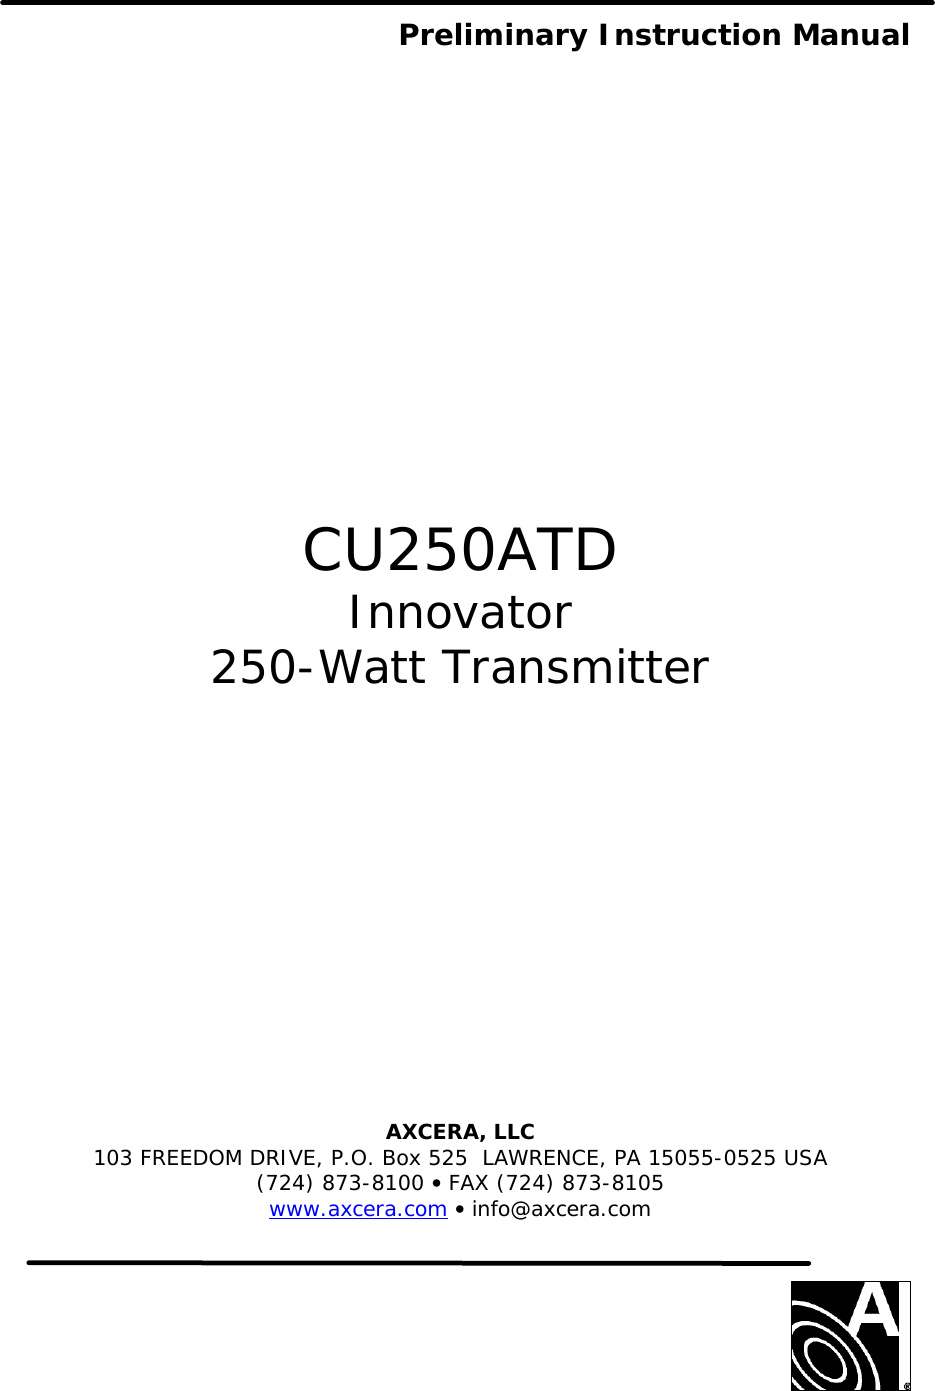  Preliminary Instruction Manual                 CU250ATD Innovator 250-Watt Transmitter               AXCERA, LLC  103 FREEDOM DRIVE, P.O. Box 525  LAWRENCE, PA 15055-0525 USA (724) 873-8100 • FAX (724) 873-8105 www.axcera.com • info@axcera.com     